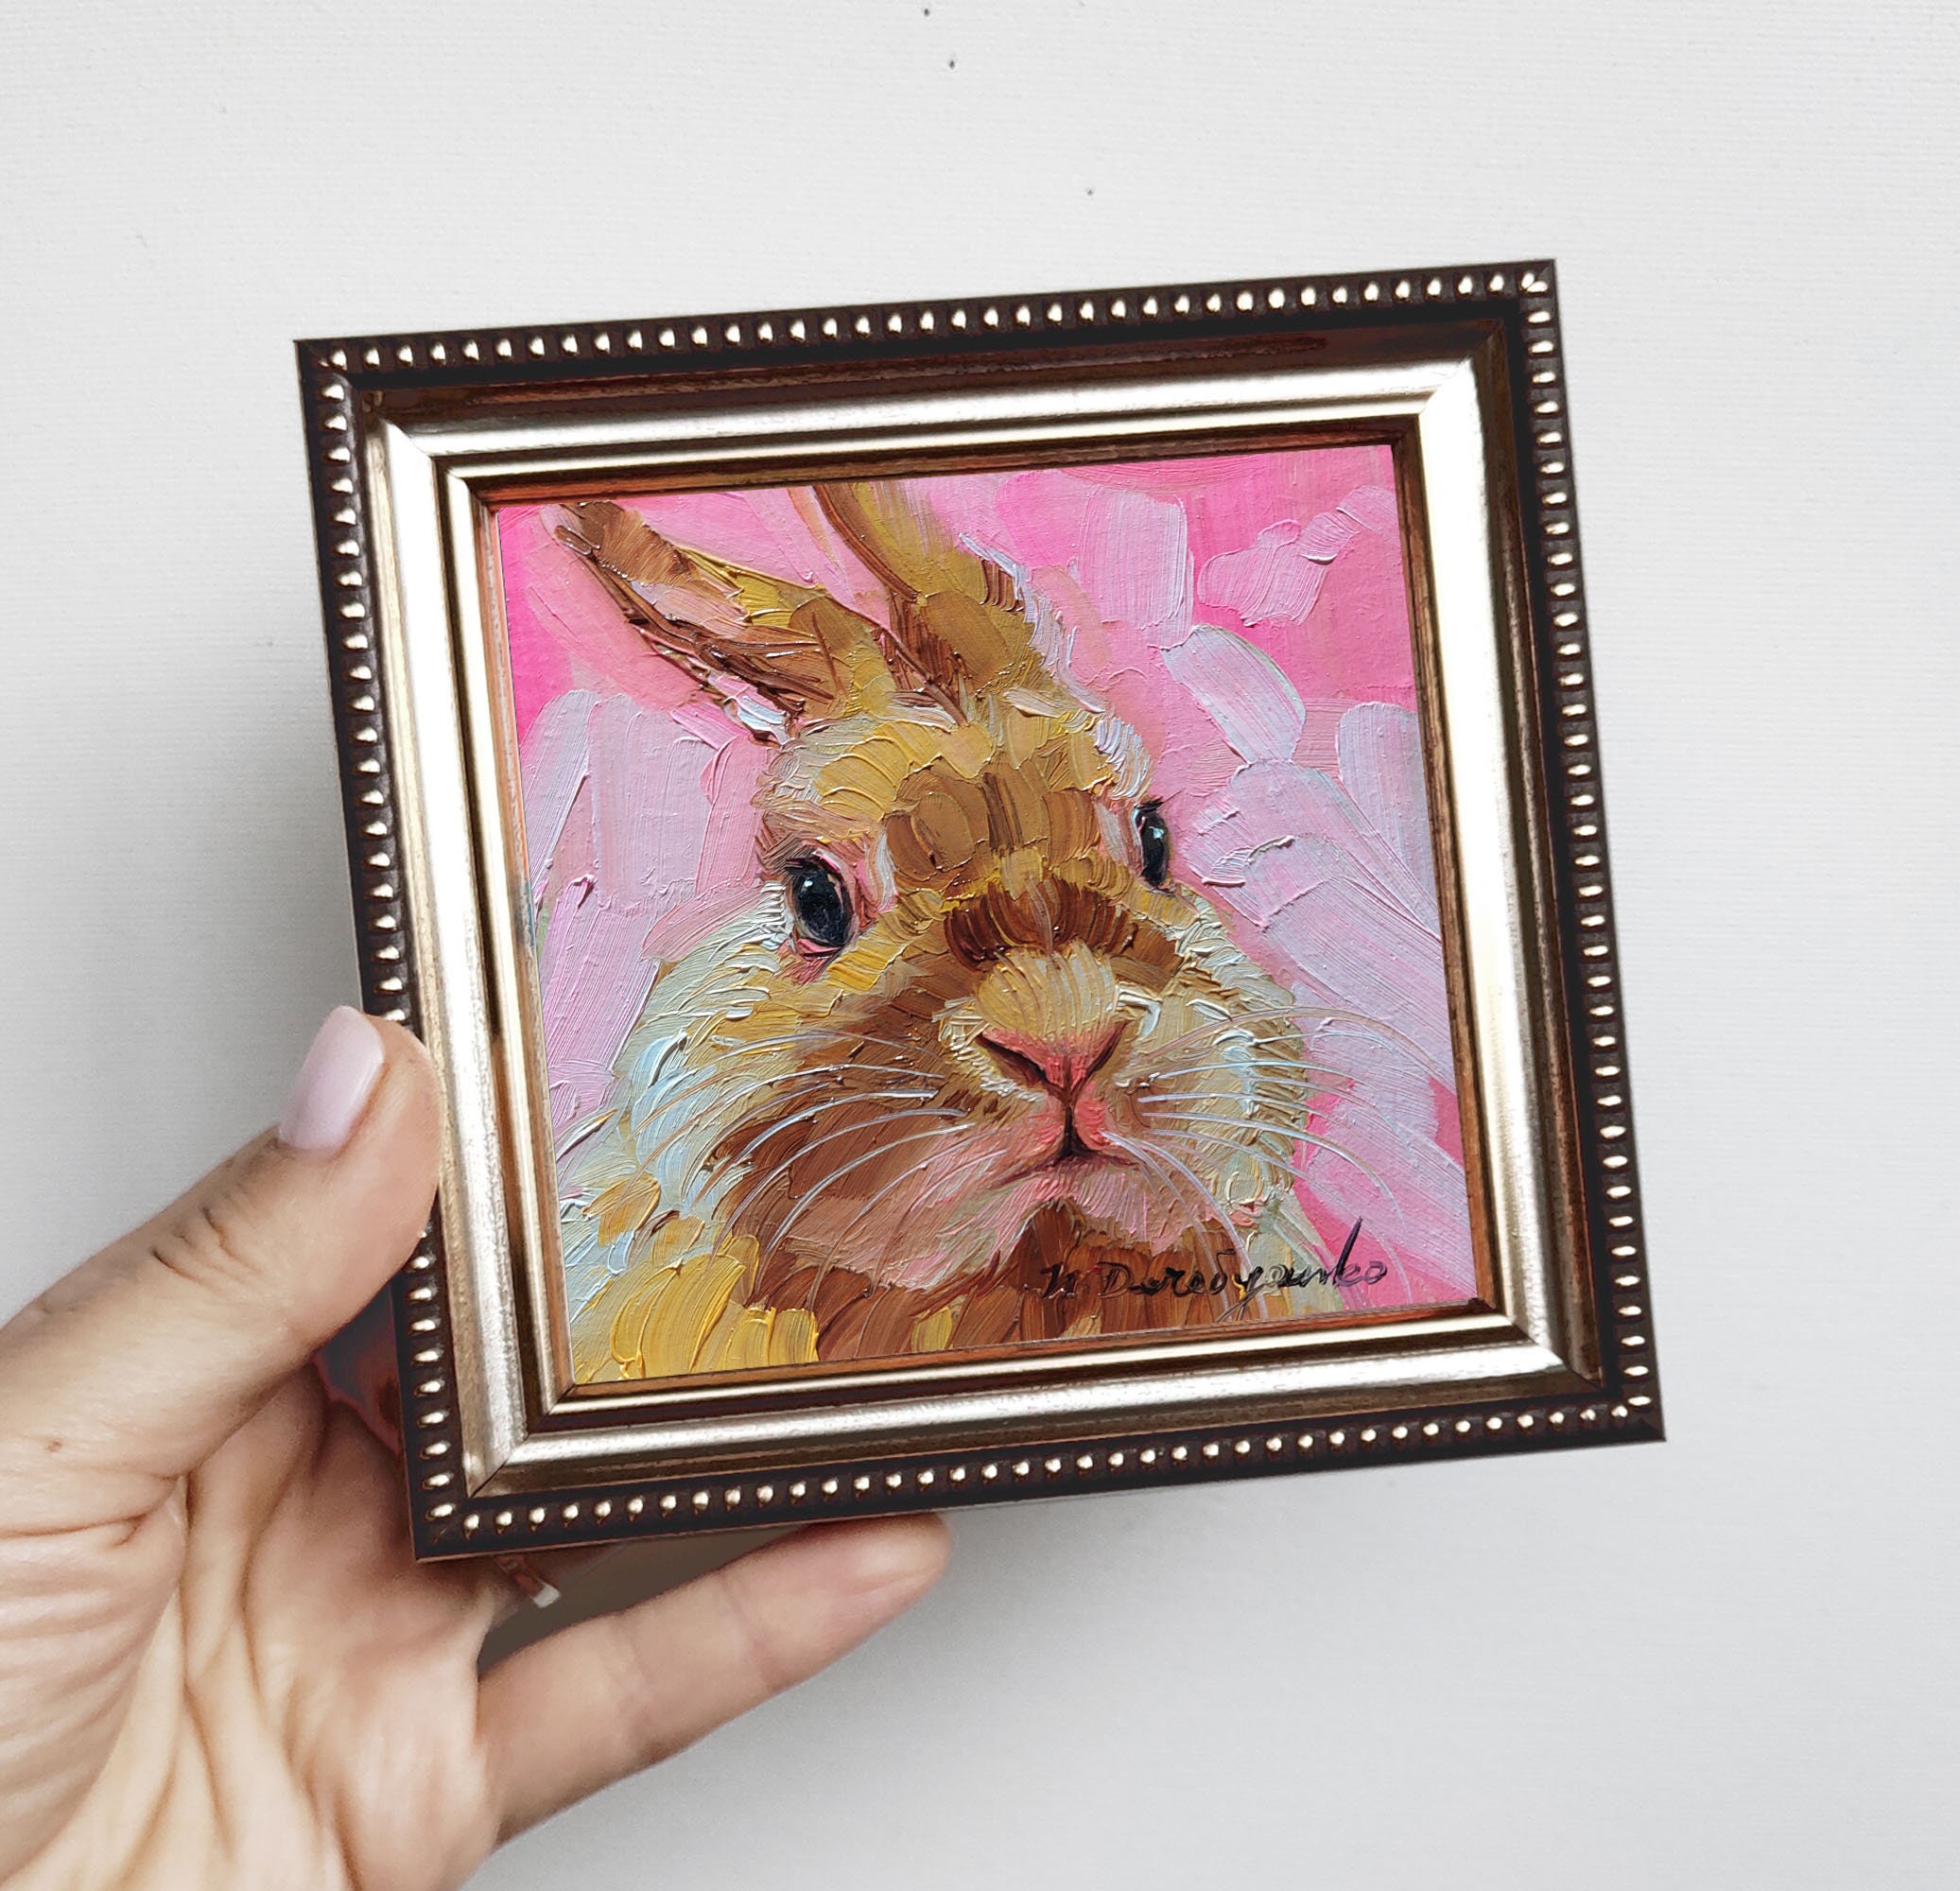 Oil Painting Canvas Kids Rabbit Pink Stock Illustration 2319260831